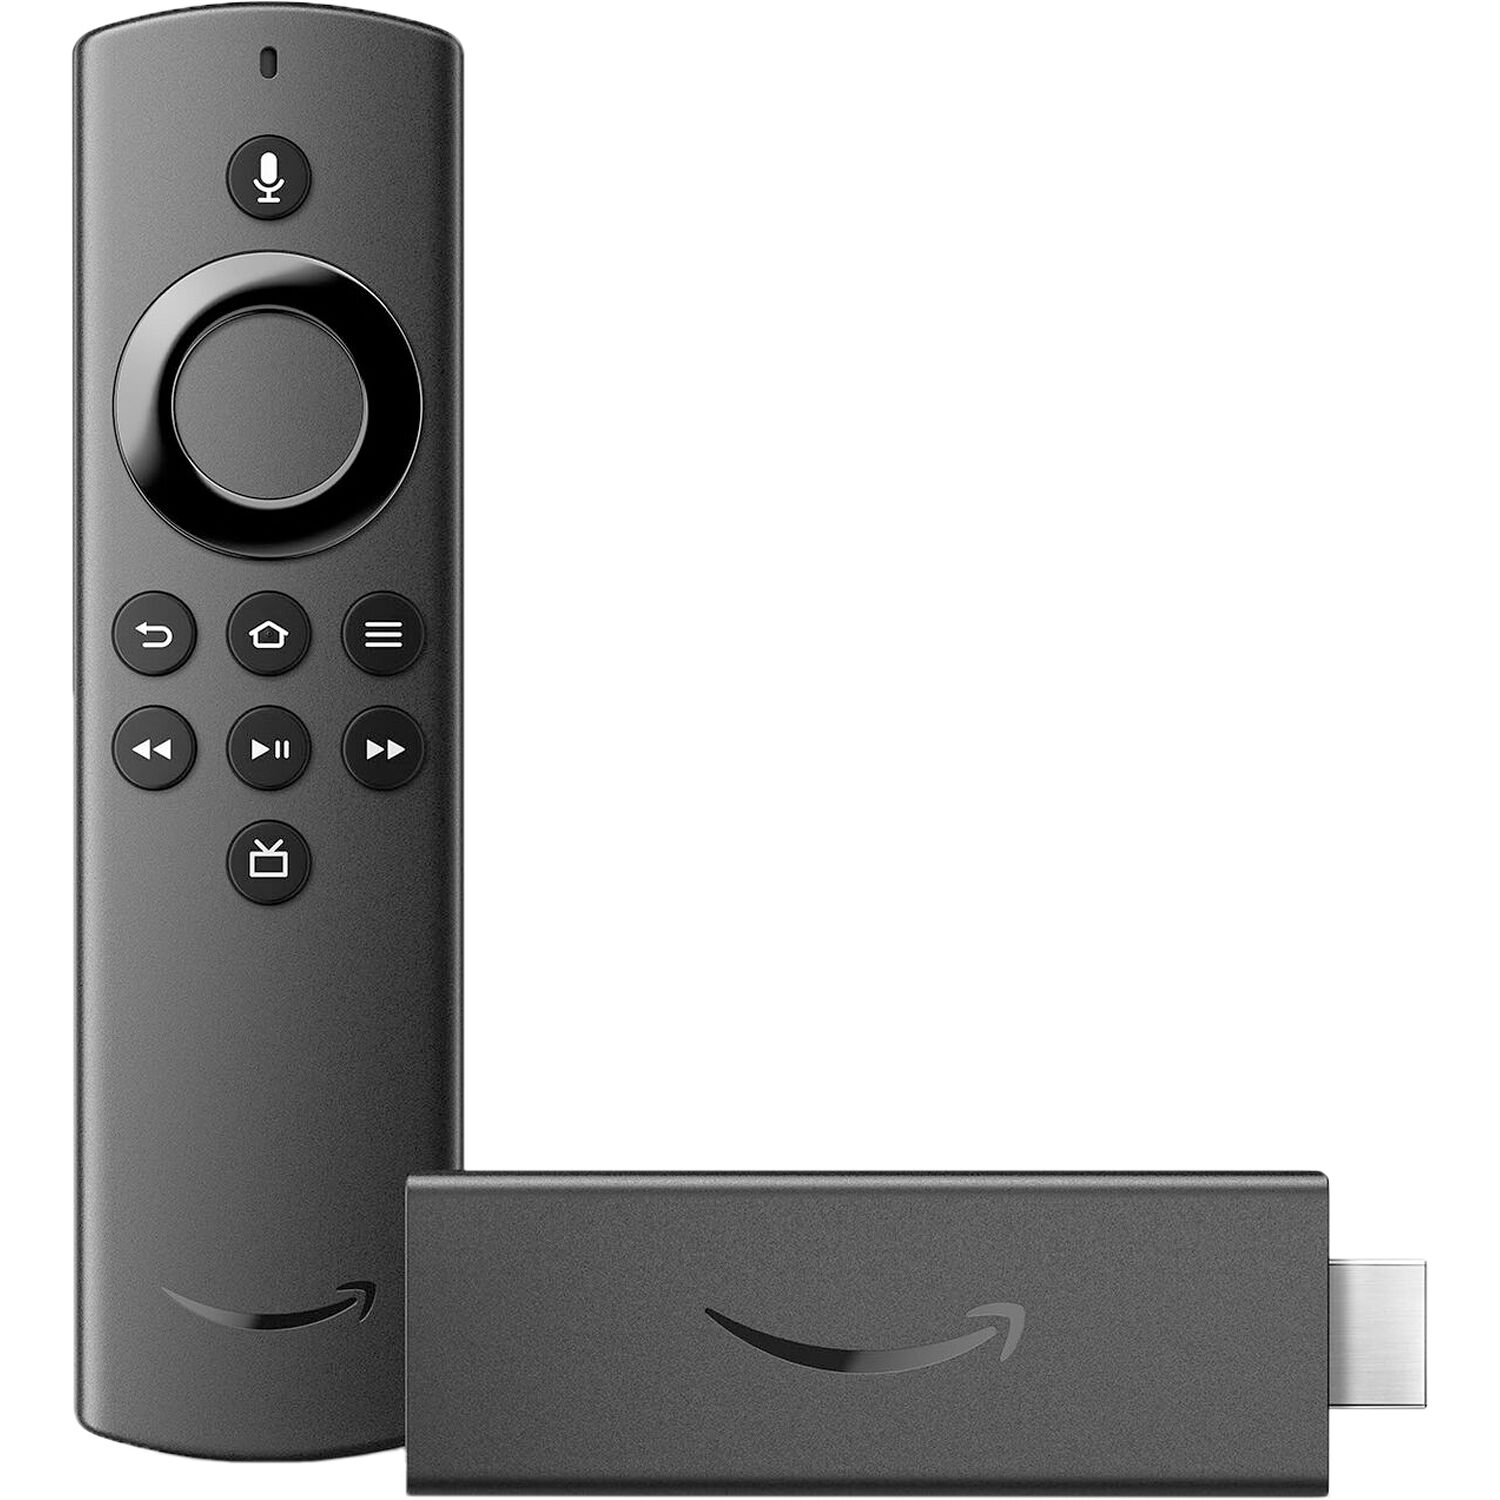 Pluto Tv Amazon Fire Stick : Amazon Com Fire Tv Stick 4k Streaming Device With Alexa Voice ...